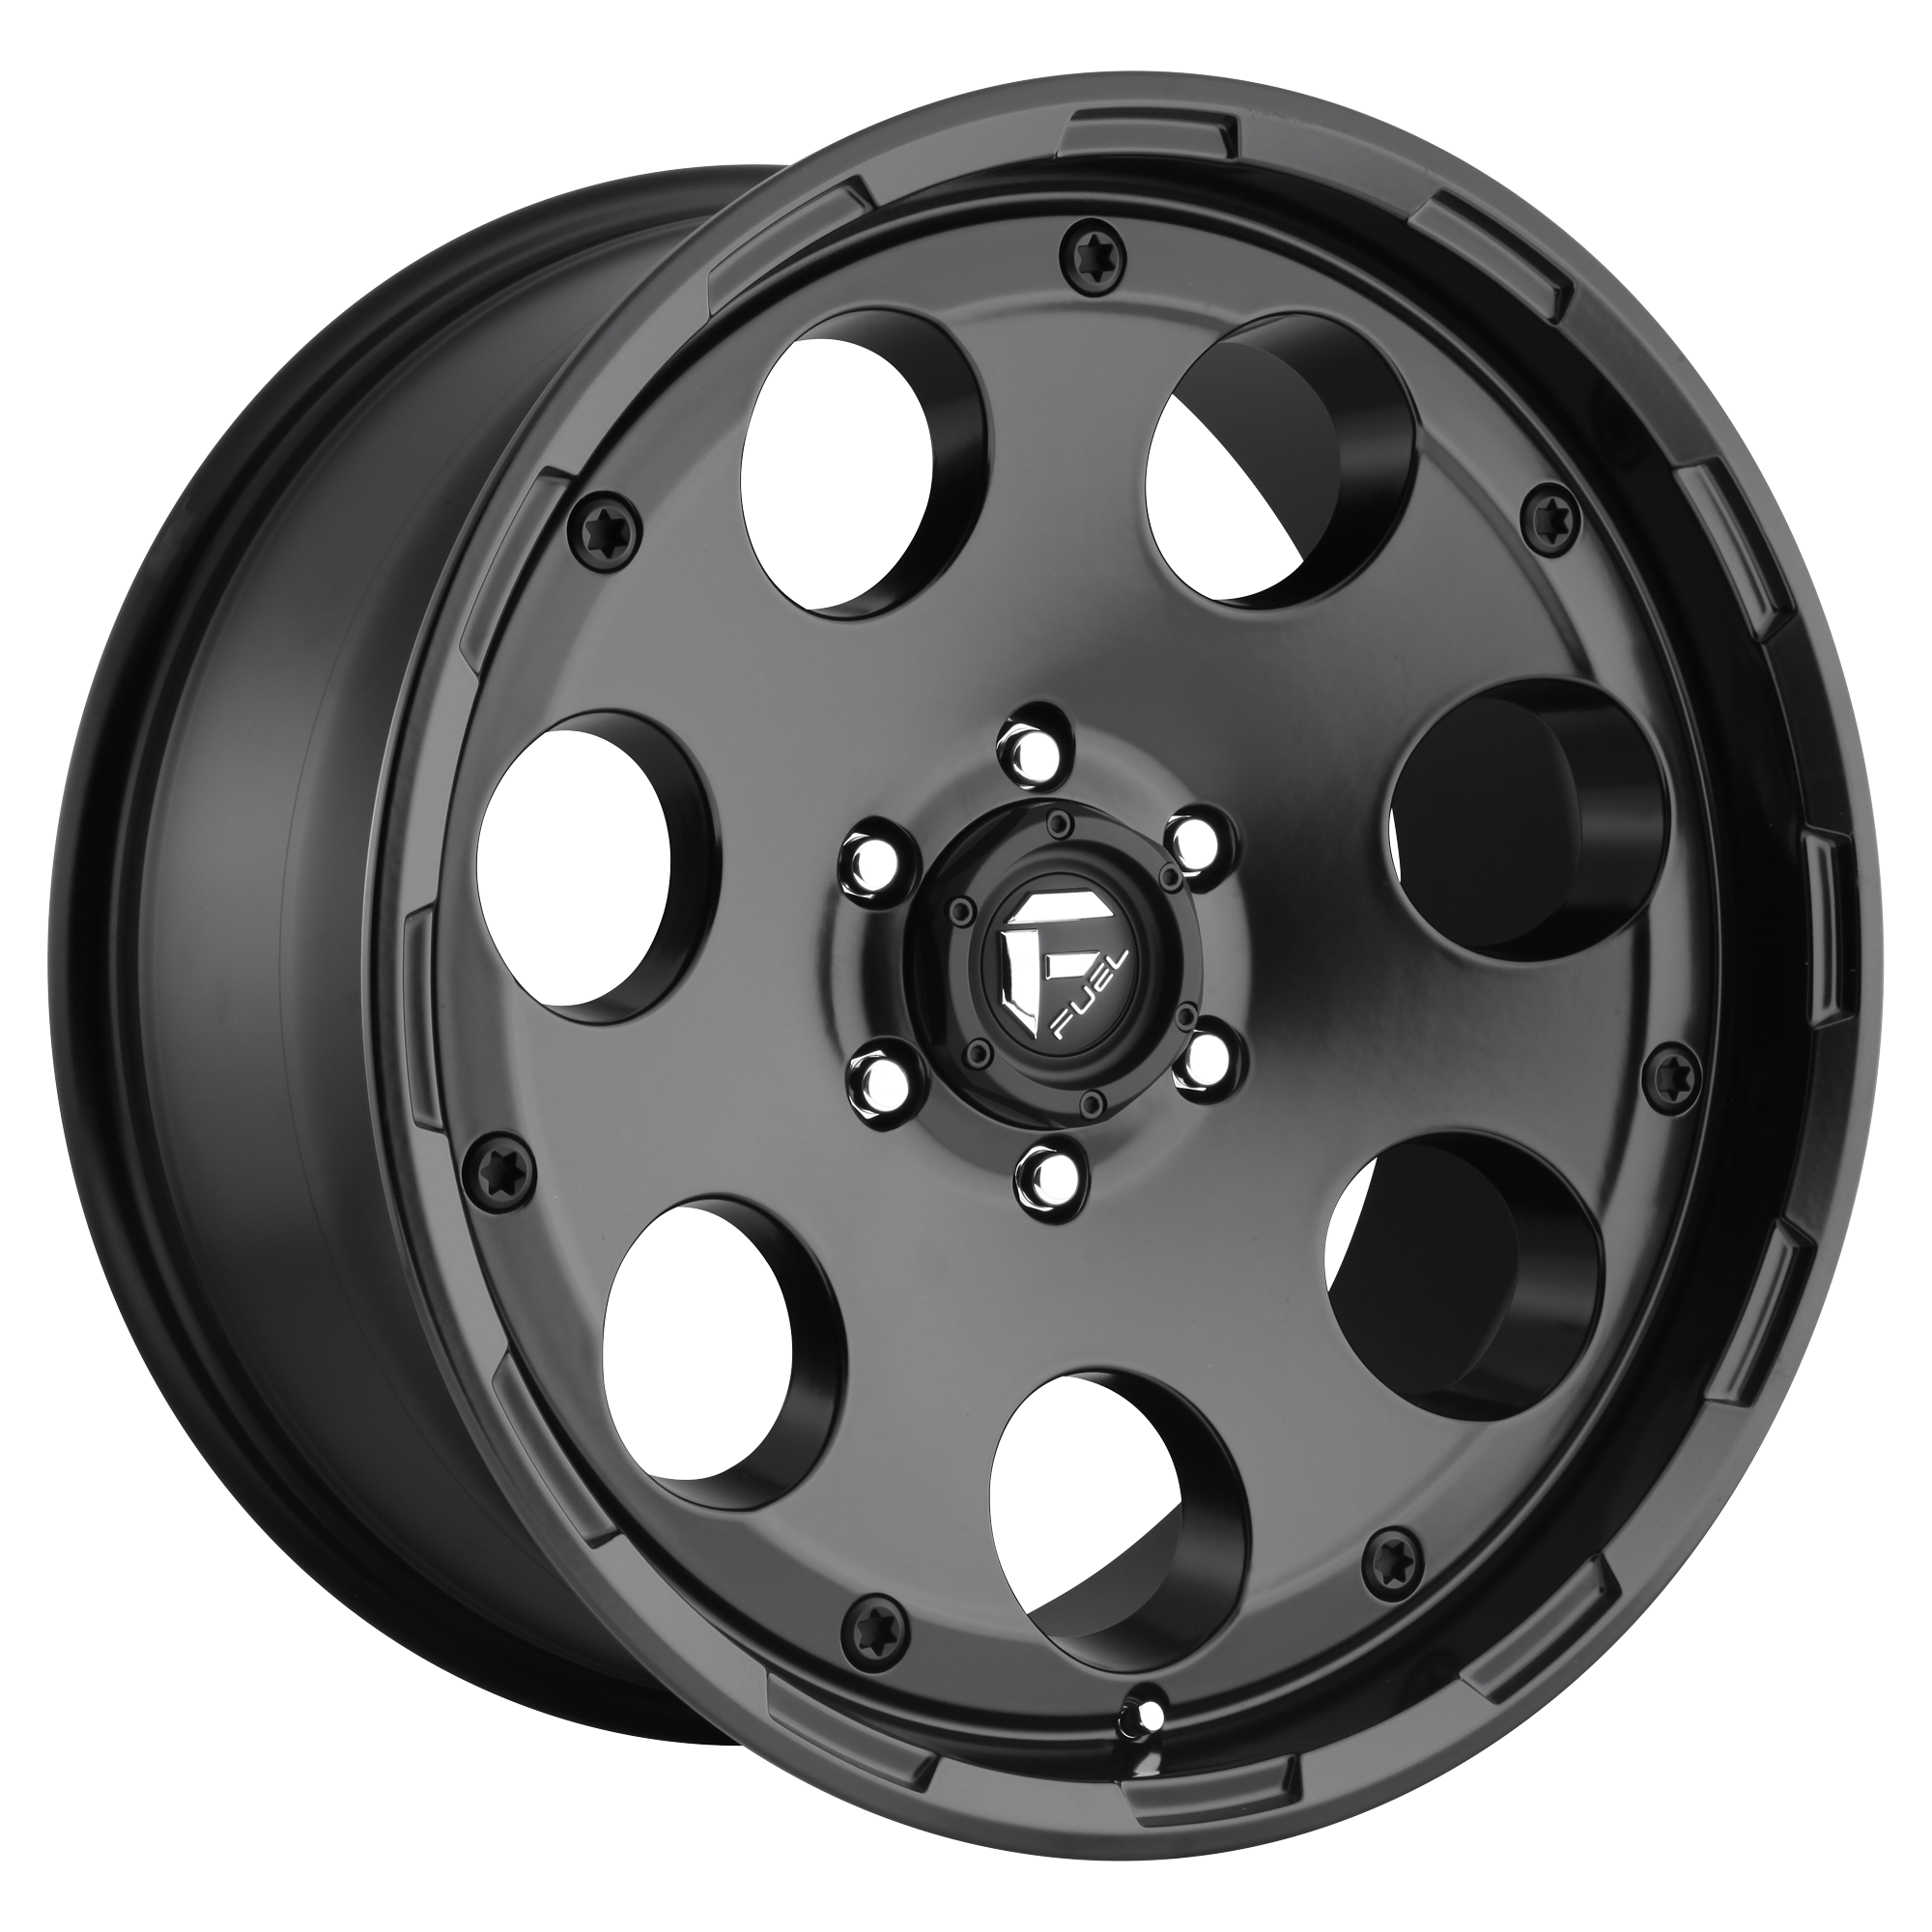 ENDURO 17x9 6x135.00 MATTE BLACK (-12 mm) - Tires and Engine Performance